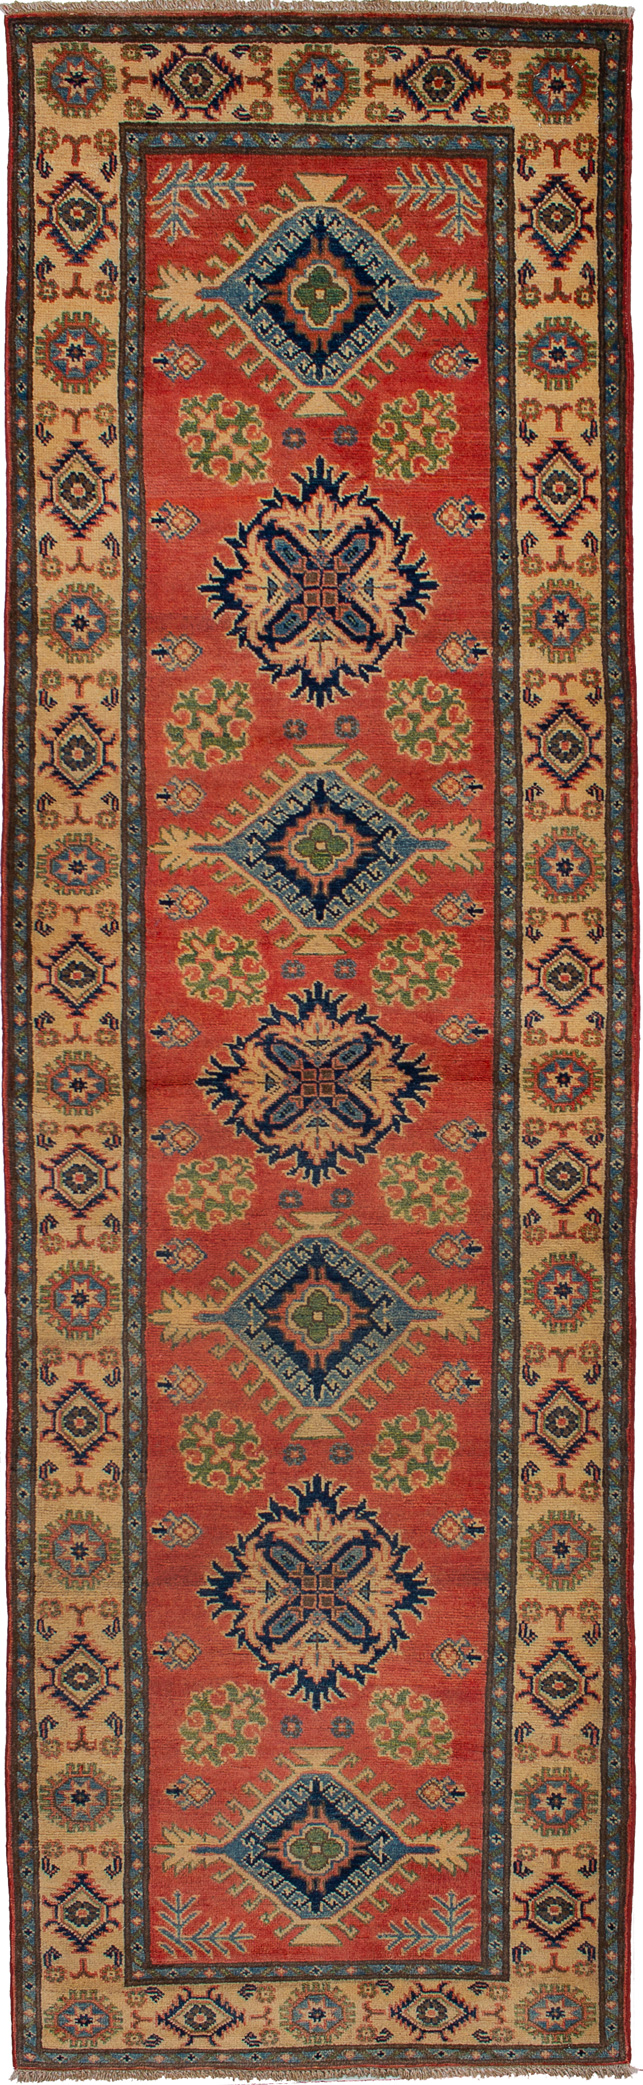 Hand-knotted Finest Gazni Dark Copper Wool Rug 2'10" x 9'10" Size: 2'10" x 9'10"  